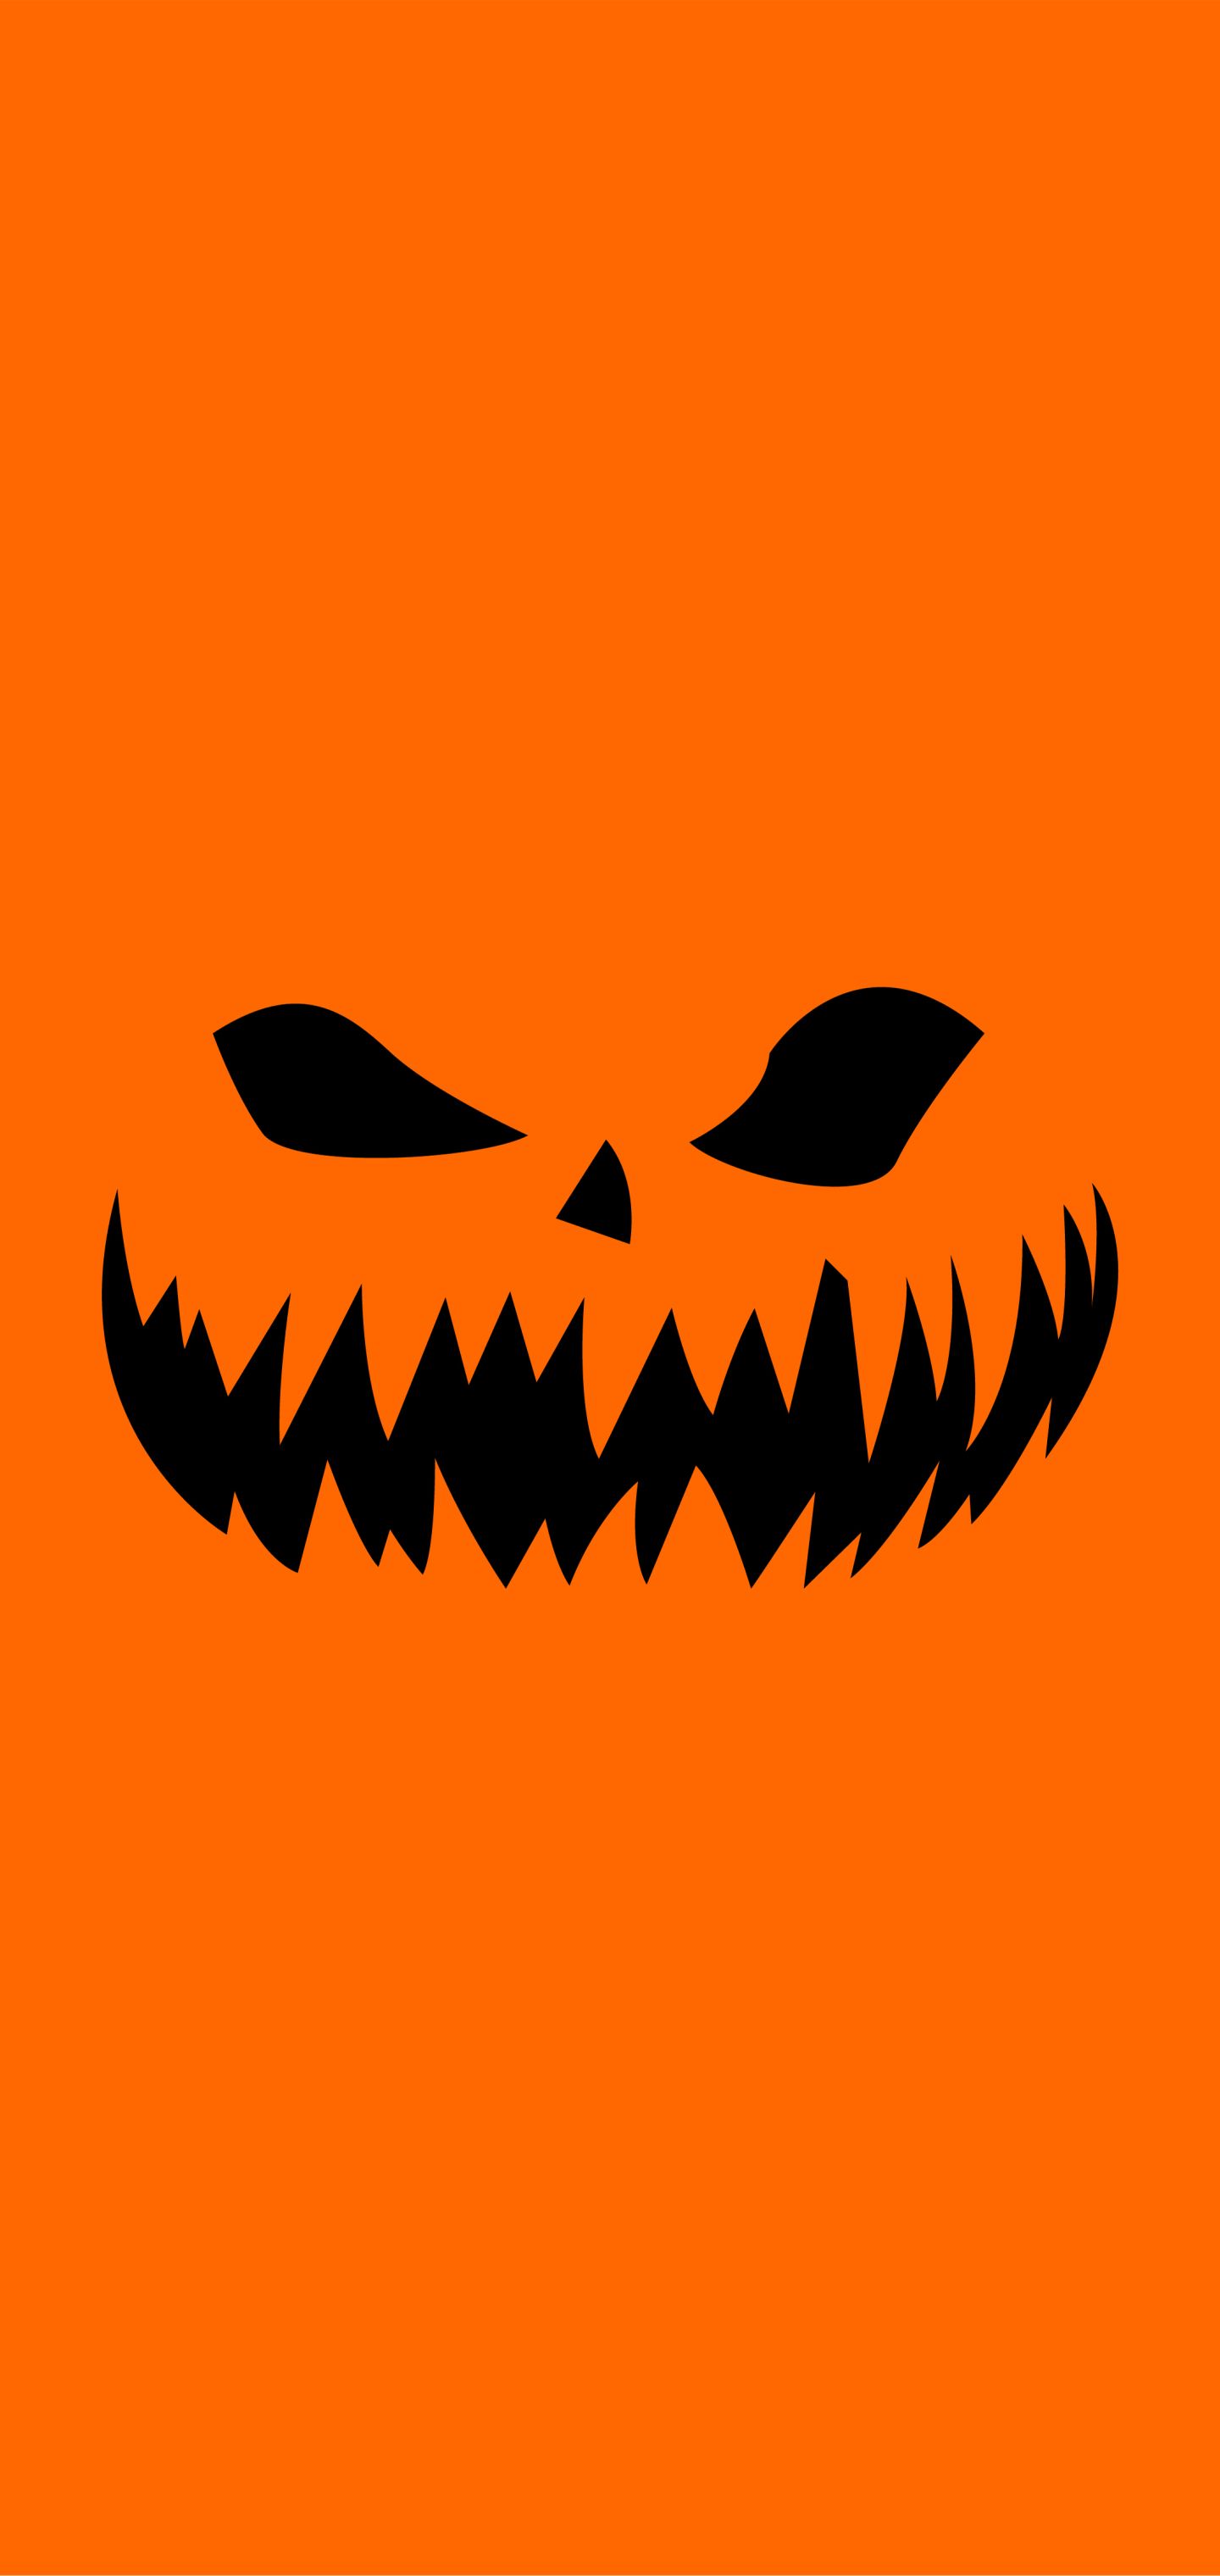 Scary pumpkin face on a orange background - Halloween, spooky